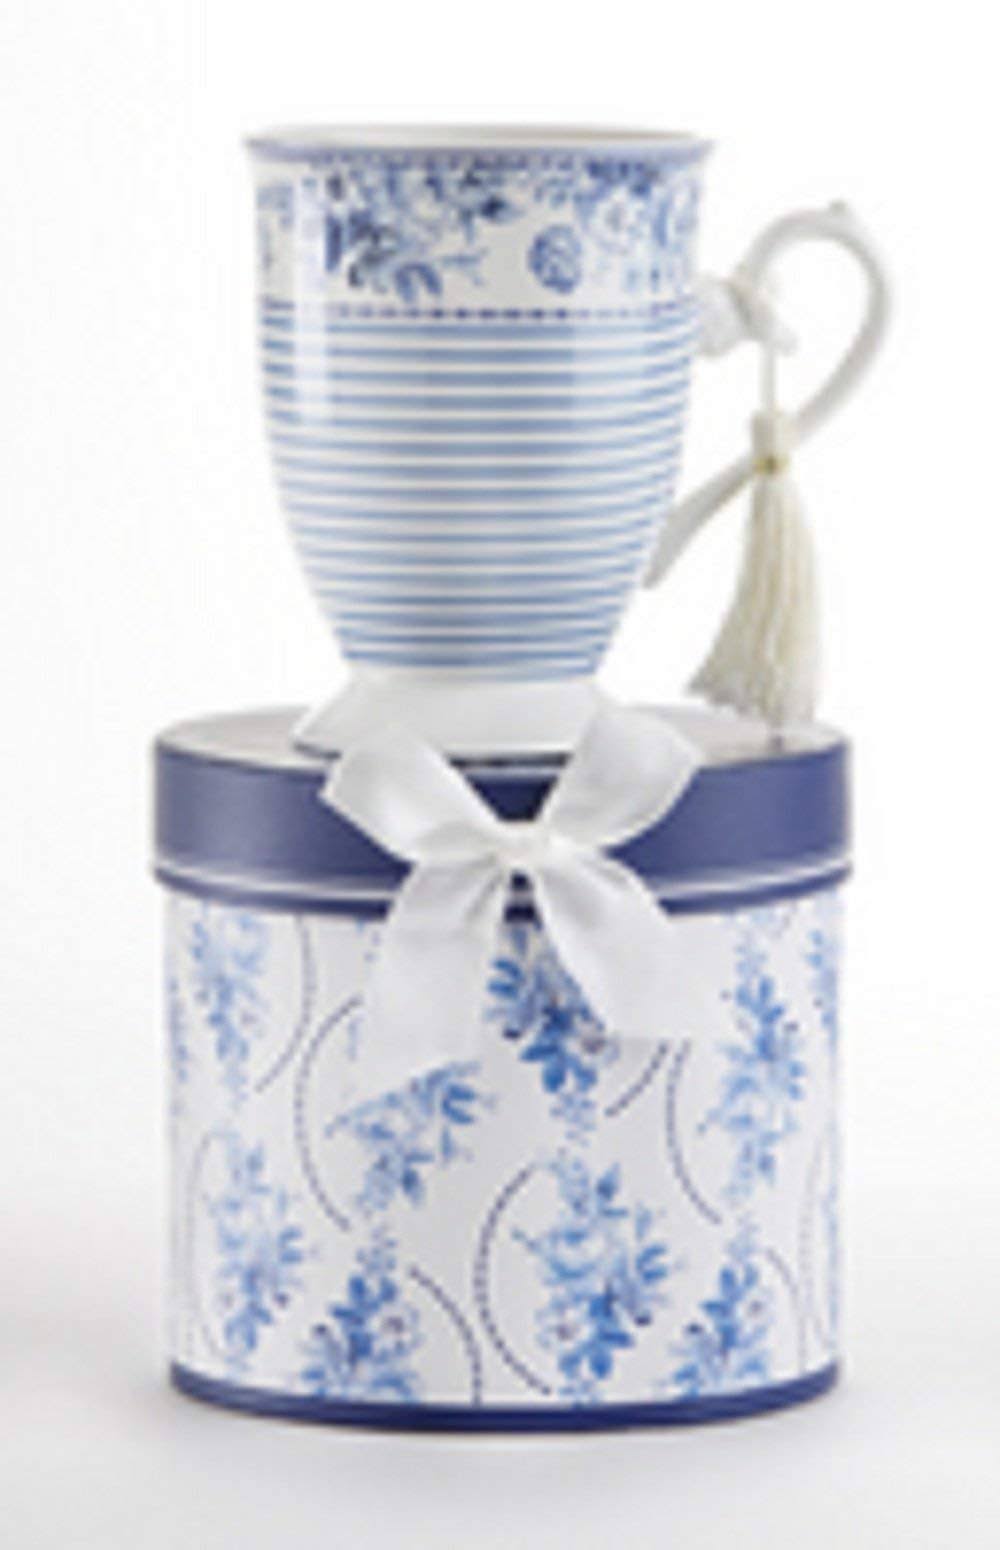 Delton Product Porcelain Mug in Gift Box English Blue 4.6" Inches